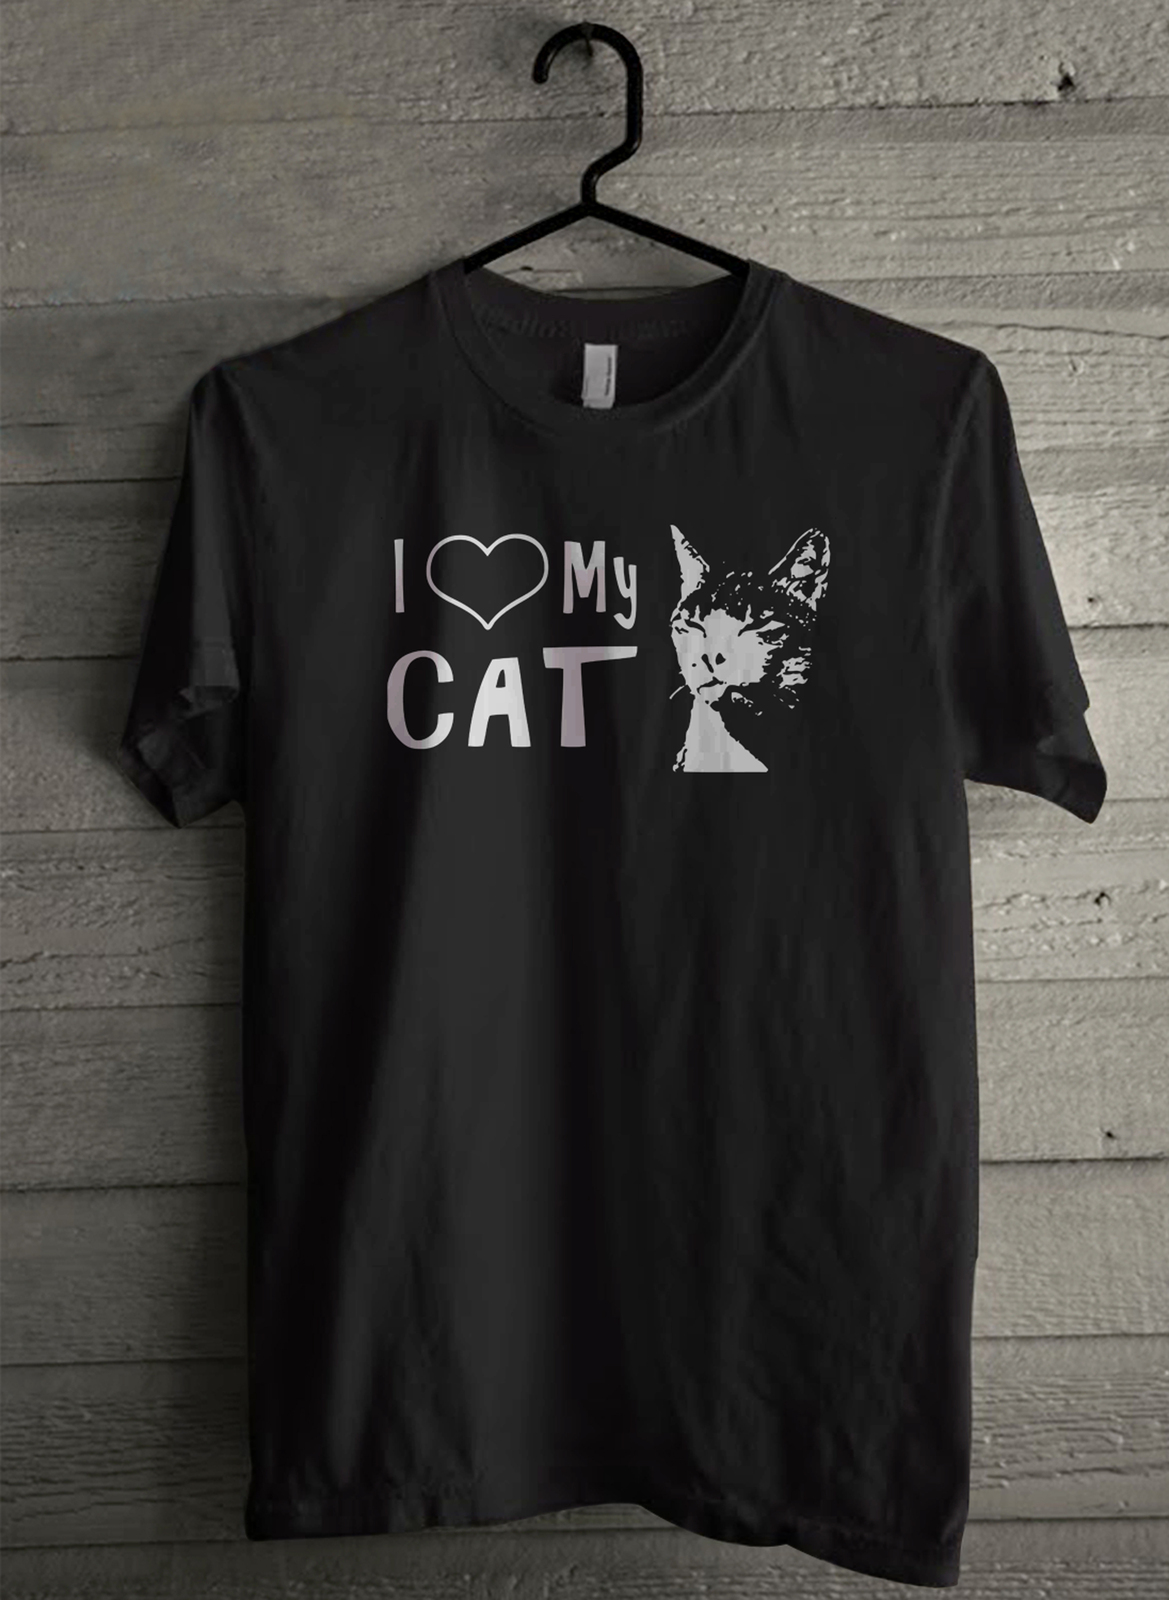 Love cat - Custom Men's T-Shirt (1645) - $19.13 - $21.84